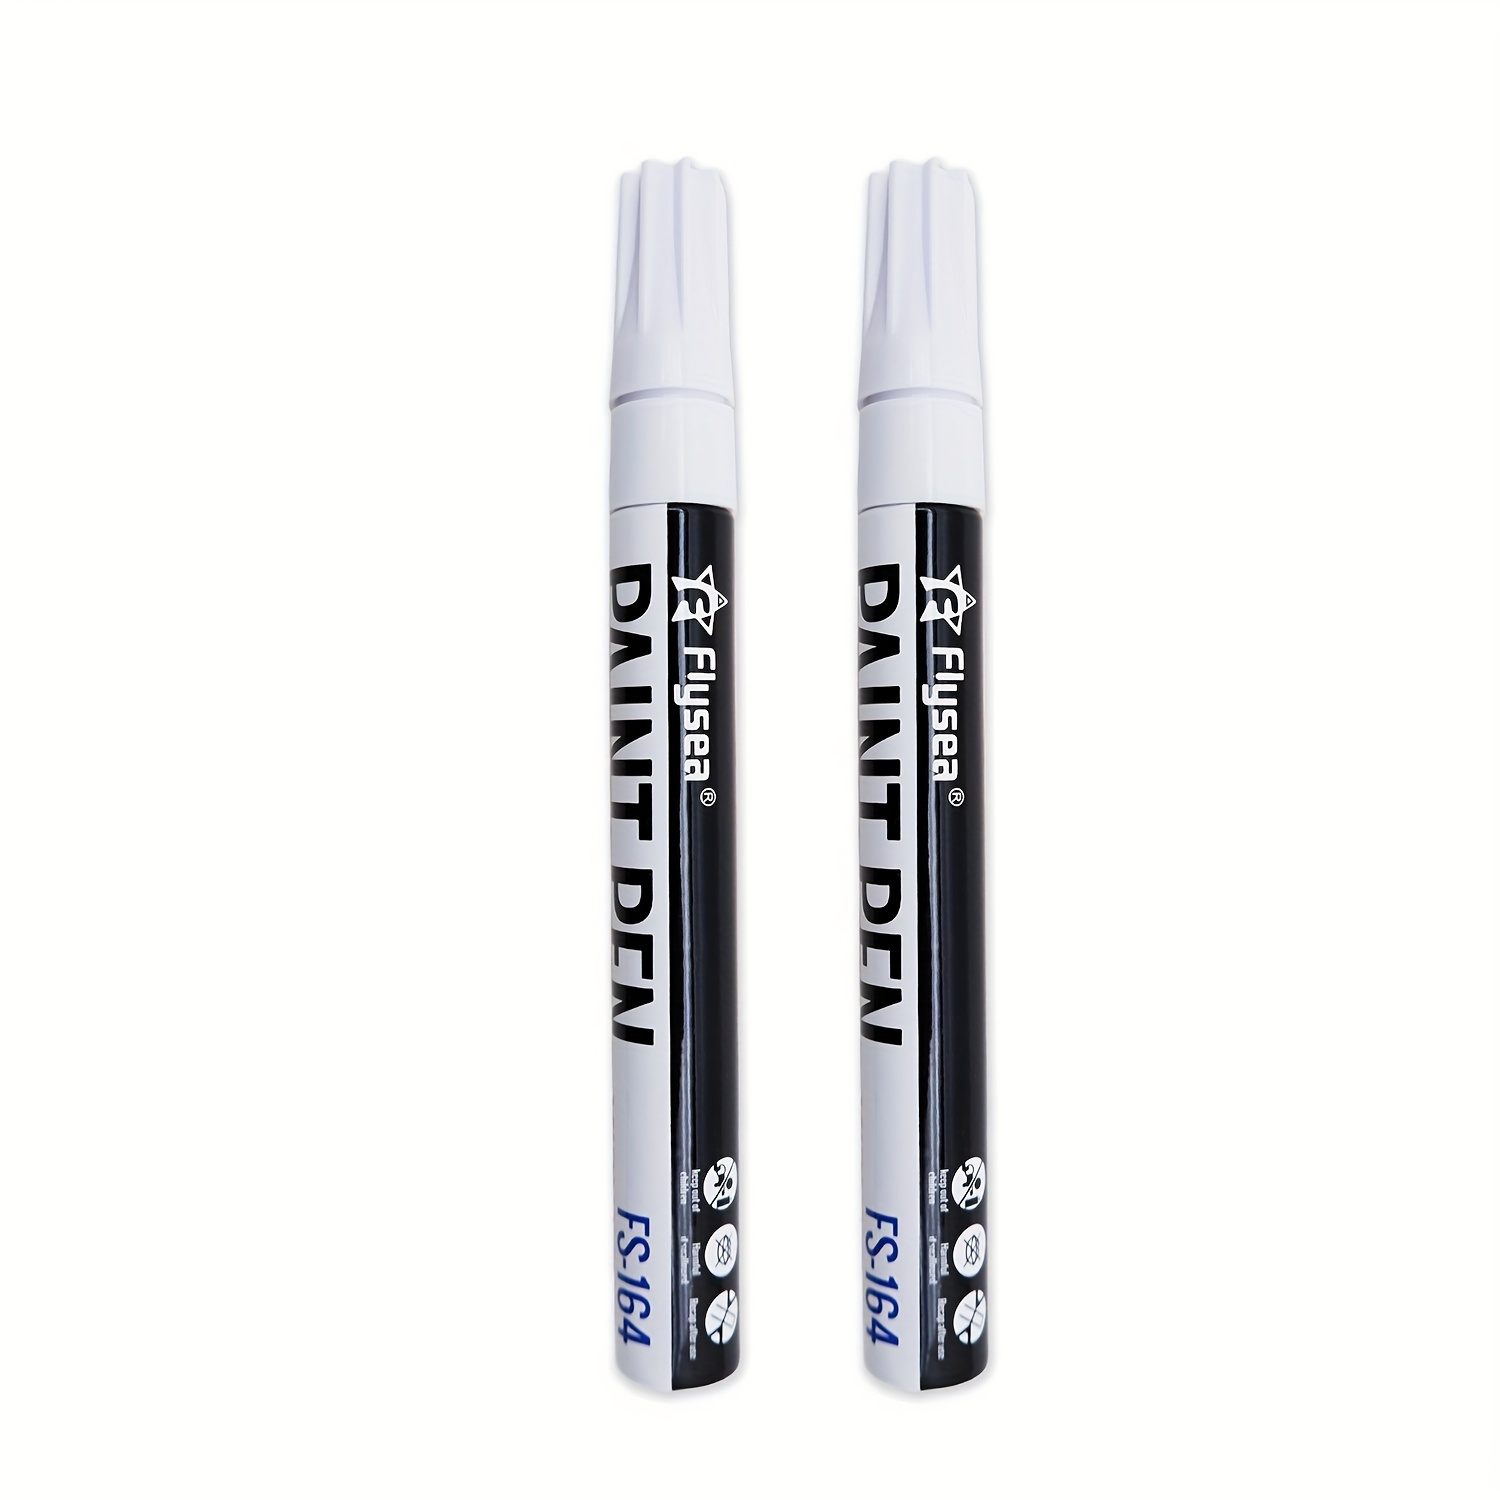 Haile 5Pcs Oily Waterproof White Marker Pen Permanent Paint Pen Graffiti  Pens Painting,Tyre Tread Environmental Pen Art Supplies